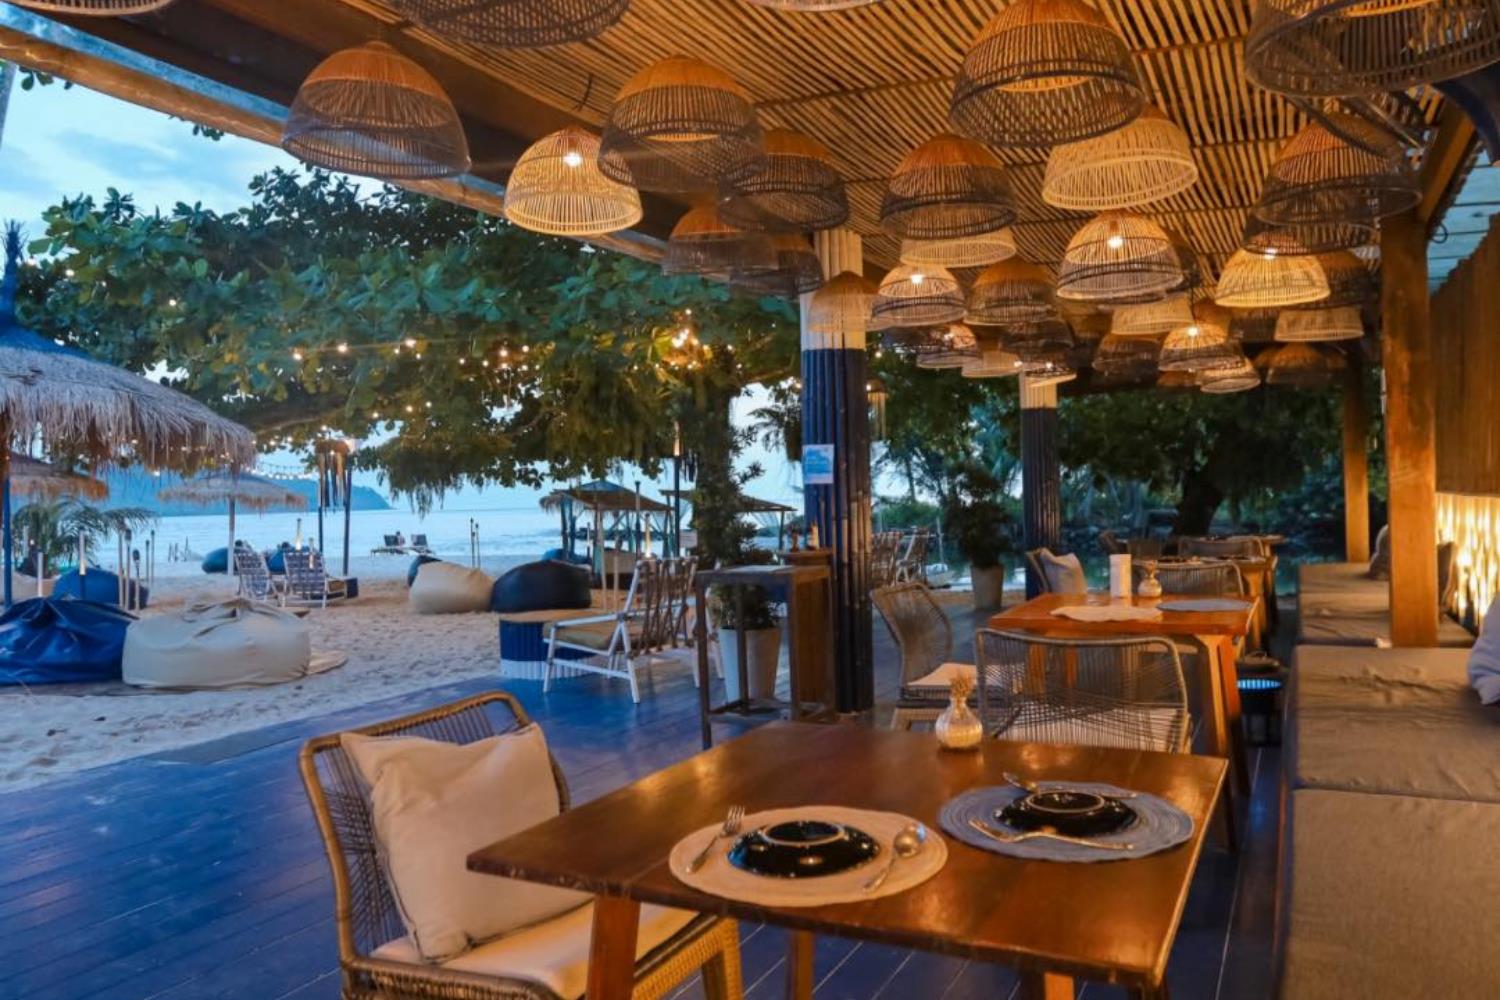 Blue - Beach cafe